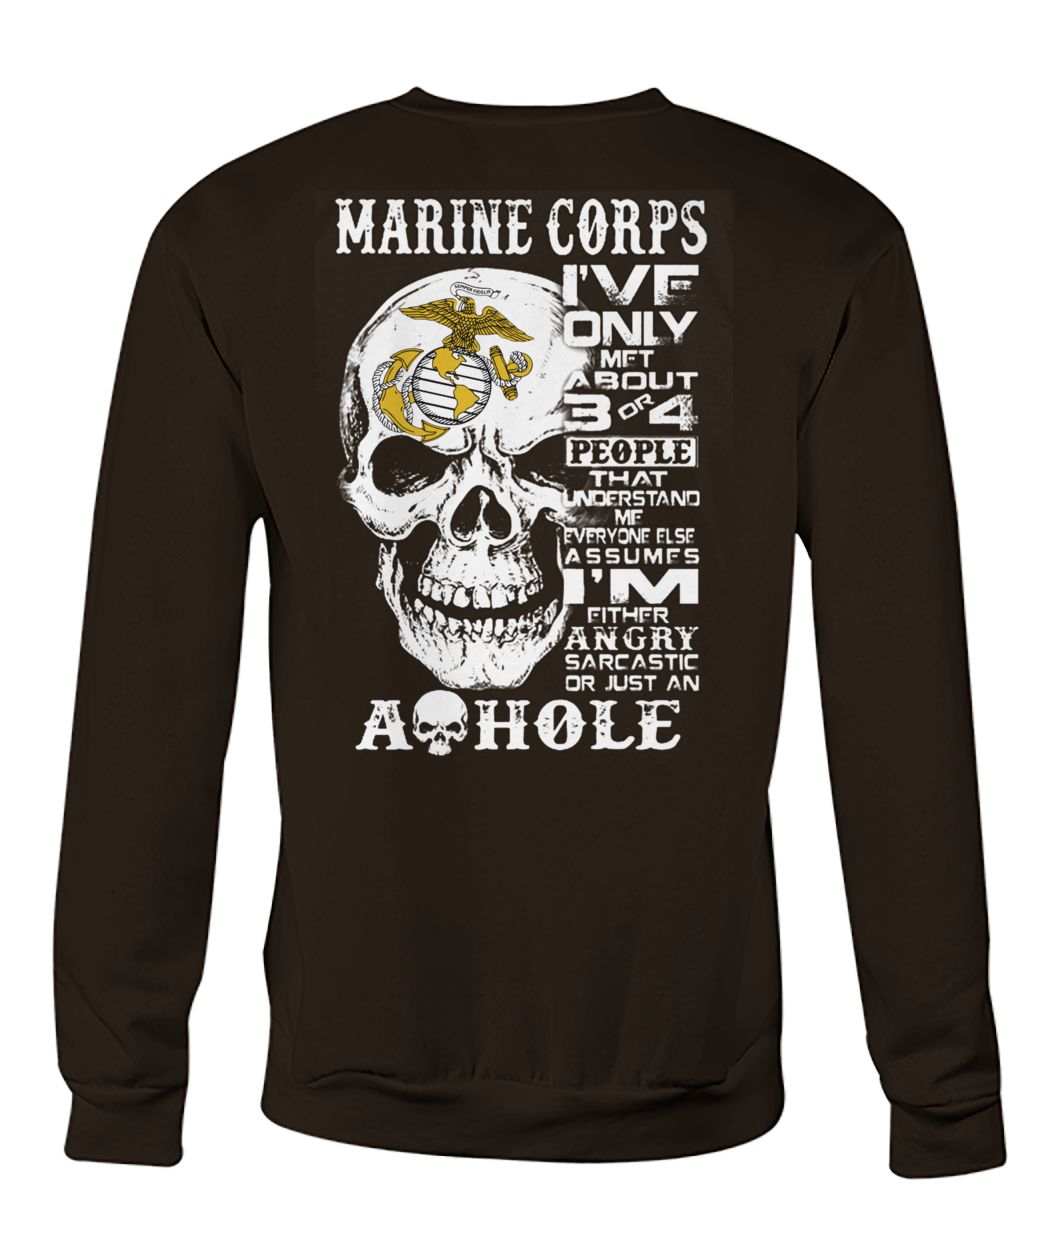 Marine corps I've only met about 3 or 4 people that understand me skull crew neck sweatshirt